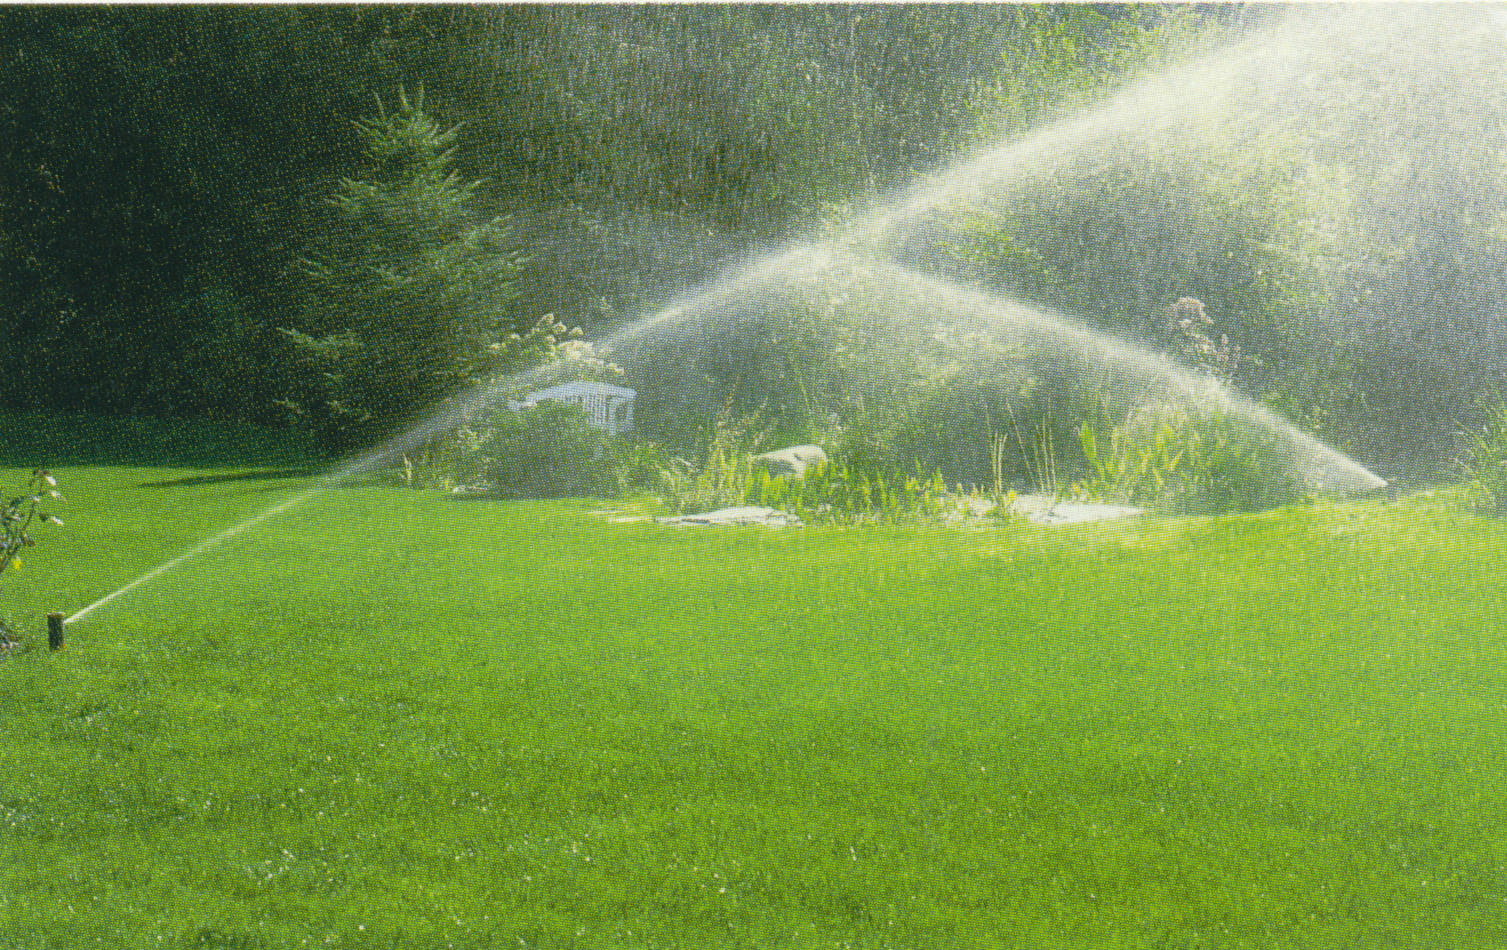 Lawn Sprinkler Contractor Essex County